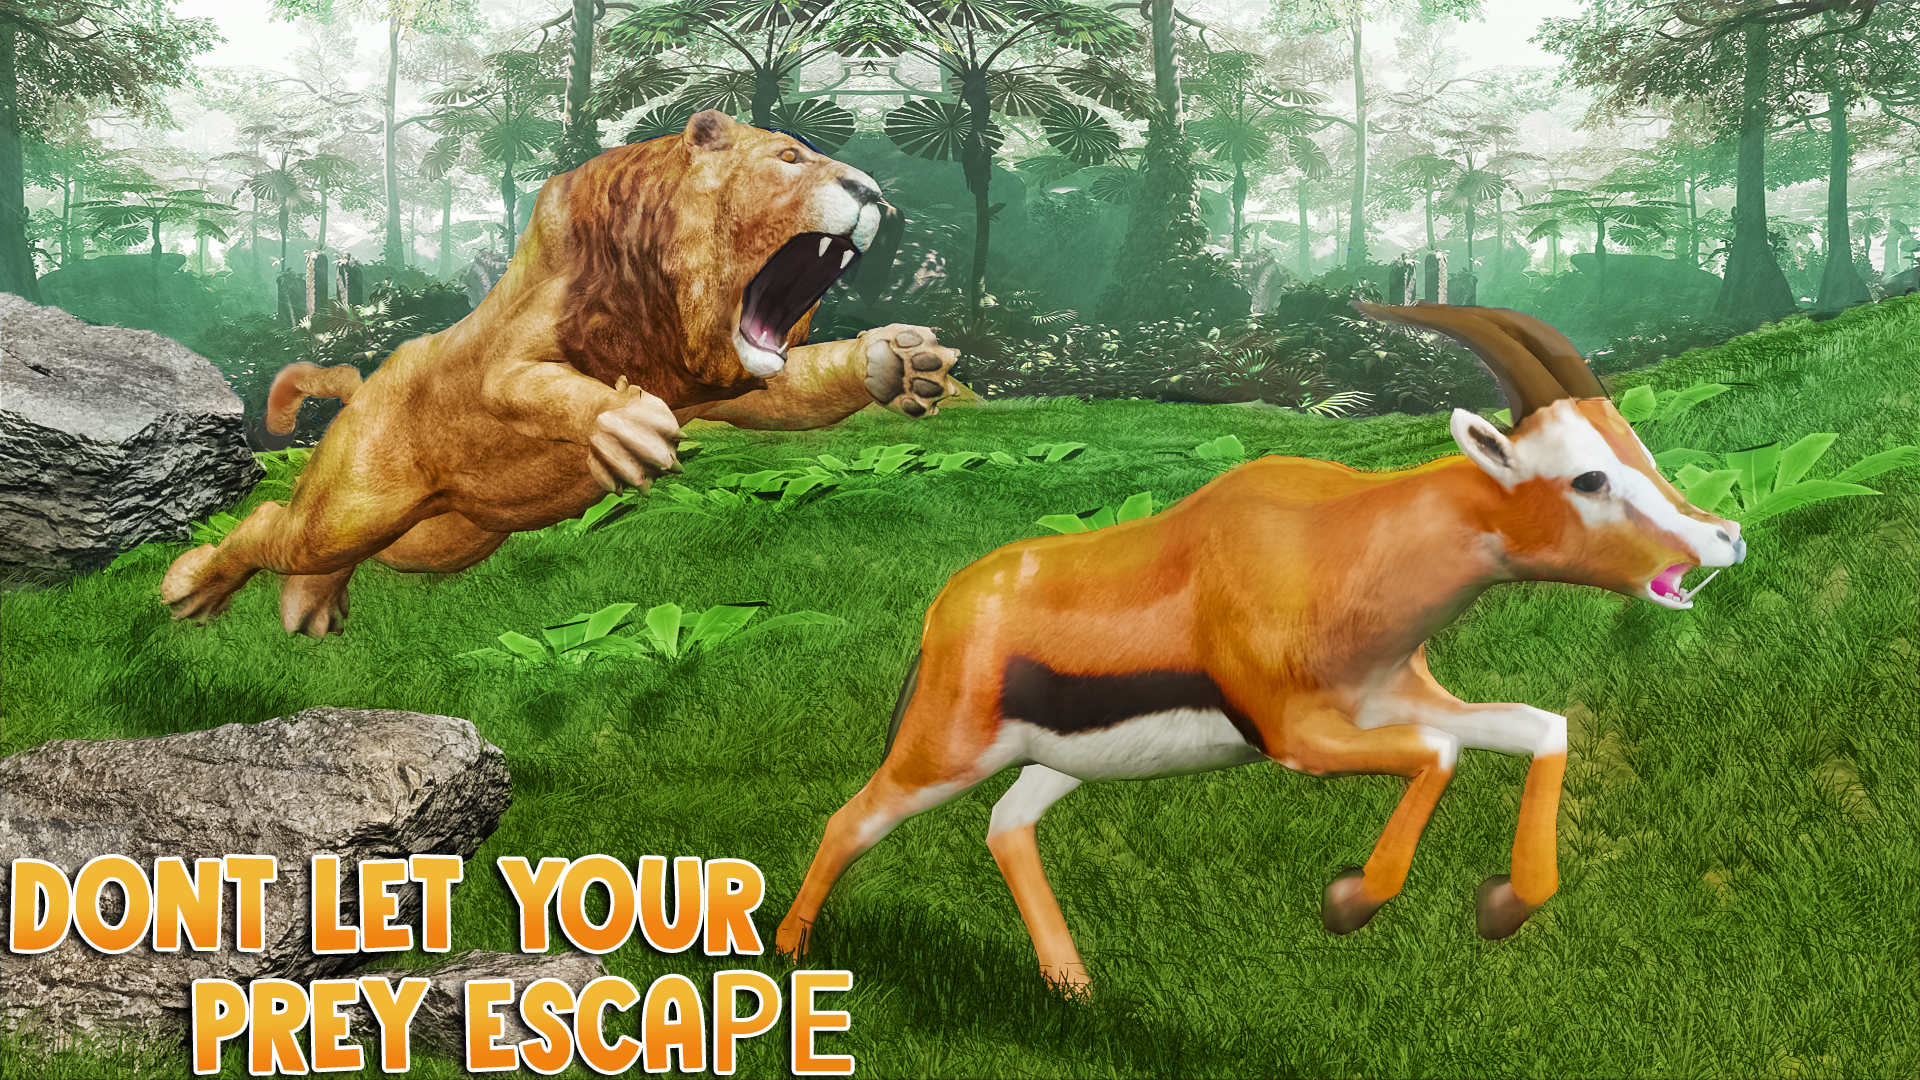 Screenshot 1 of Animal Simulator Offline Games 2.8